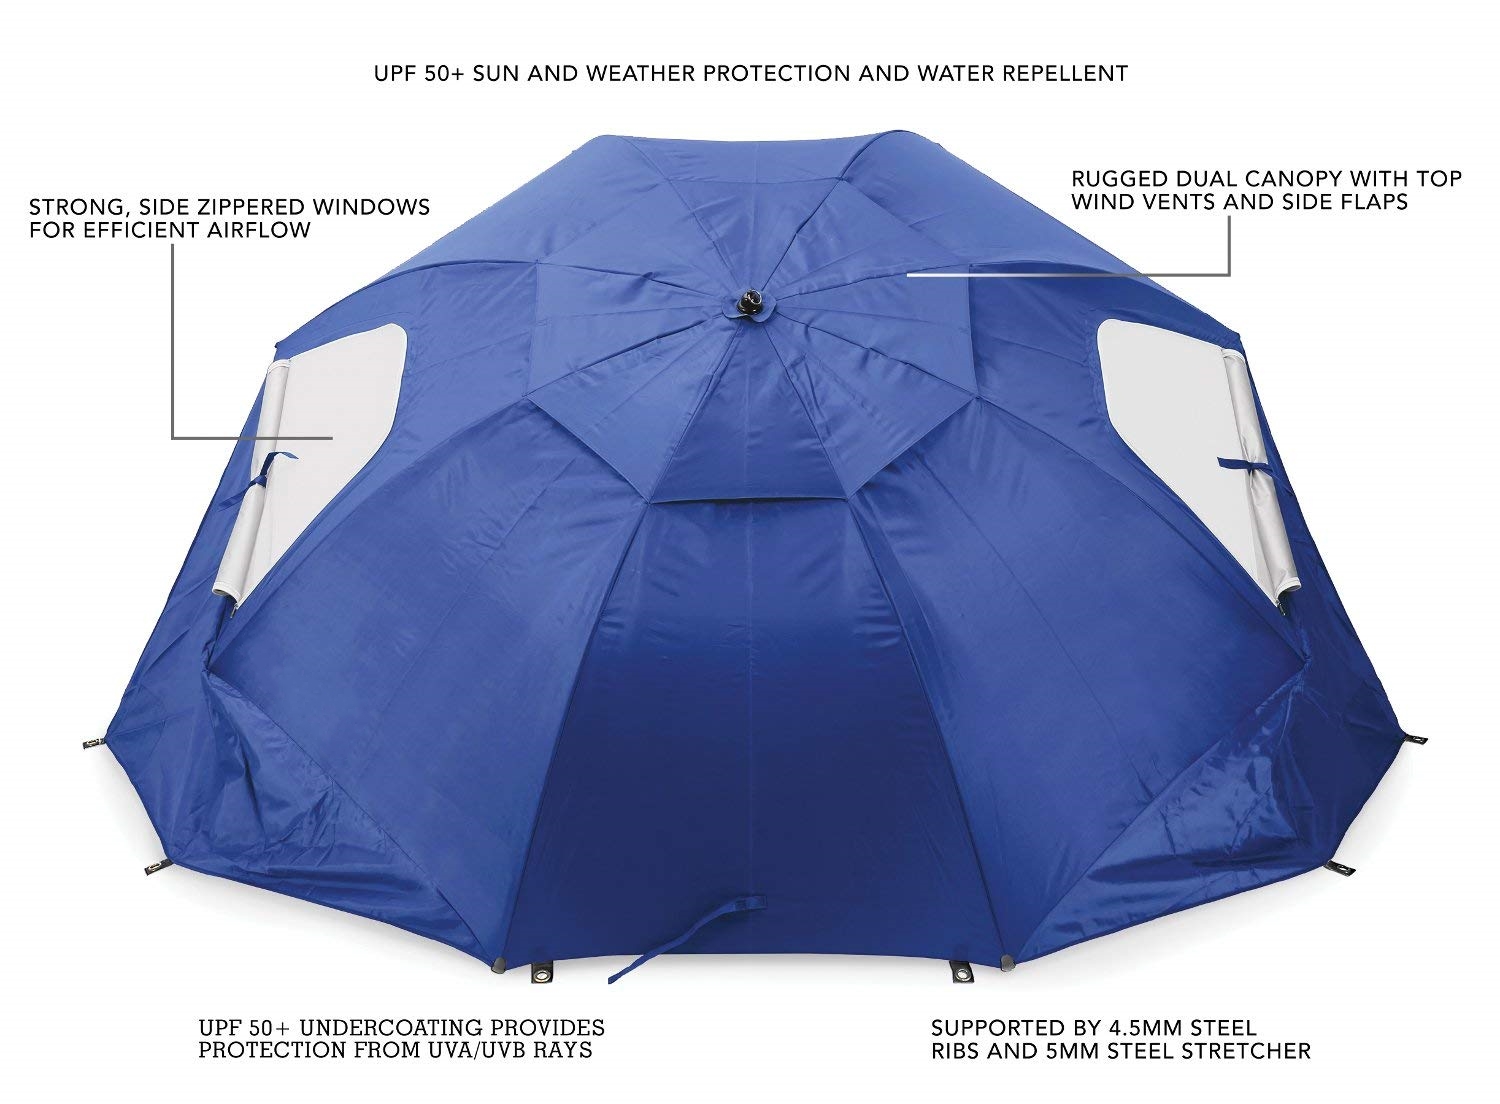 AIOIAI Portable All-Weather Sun Umbrella. 8-Foot Canopy 